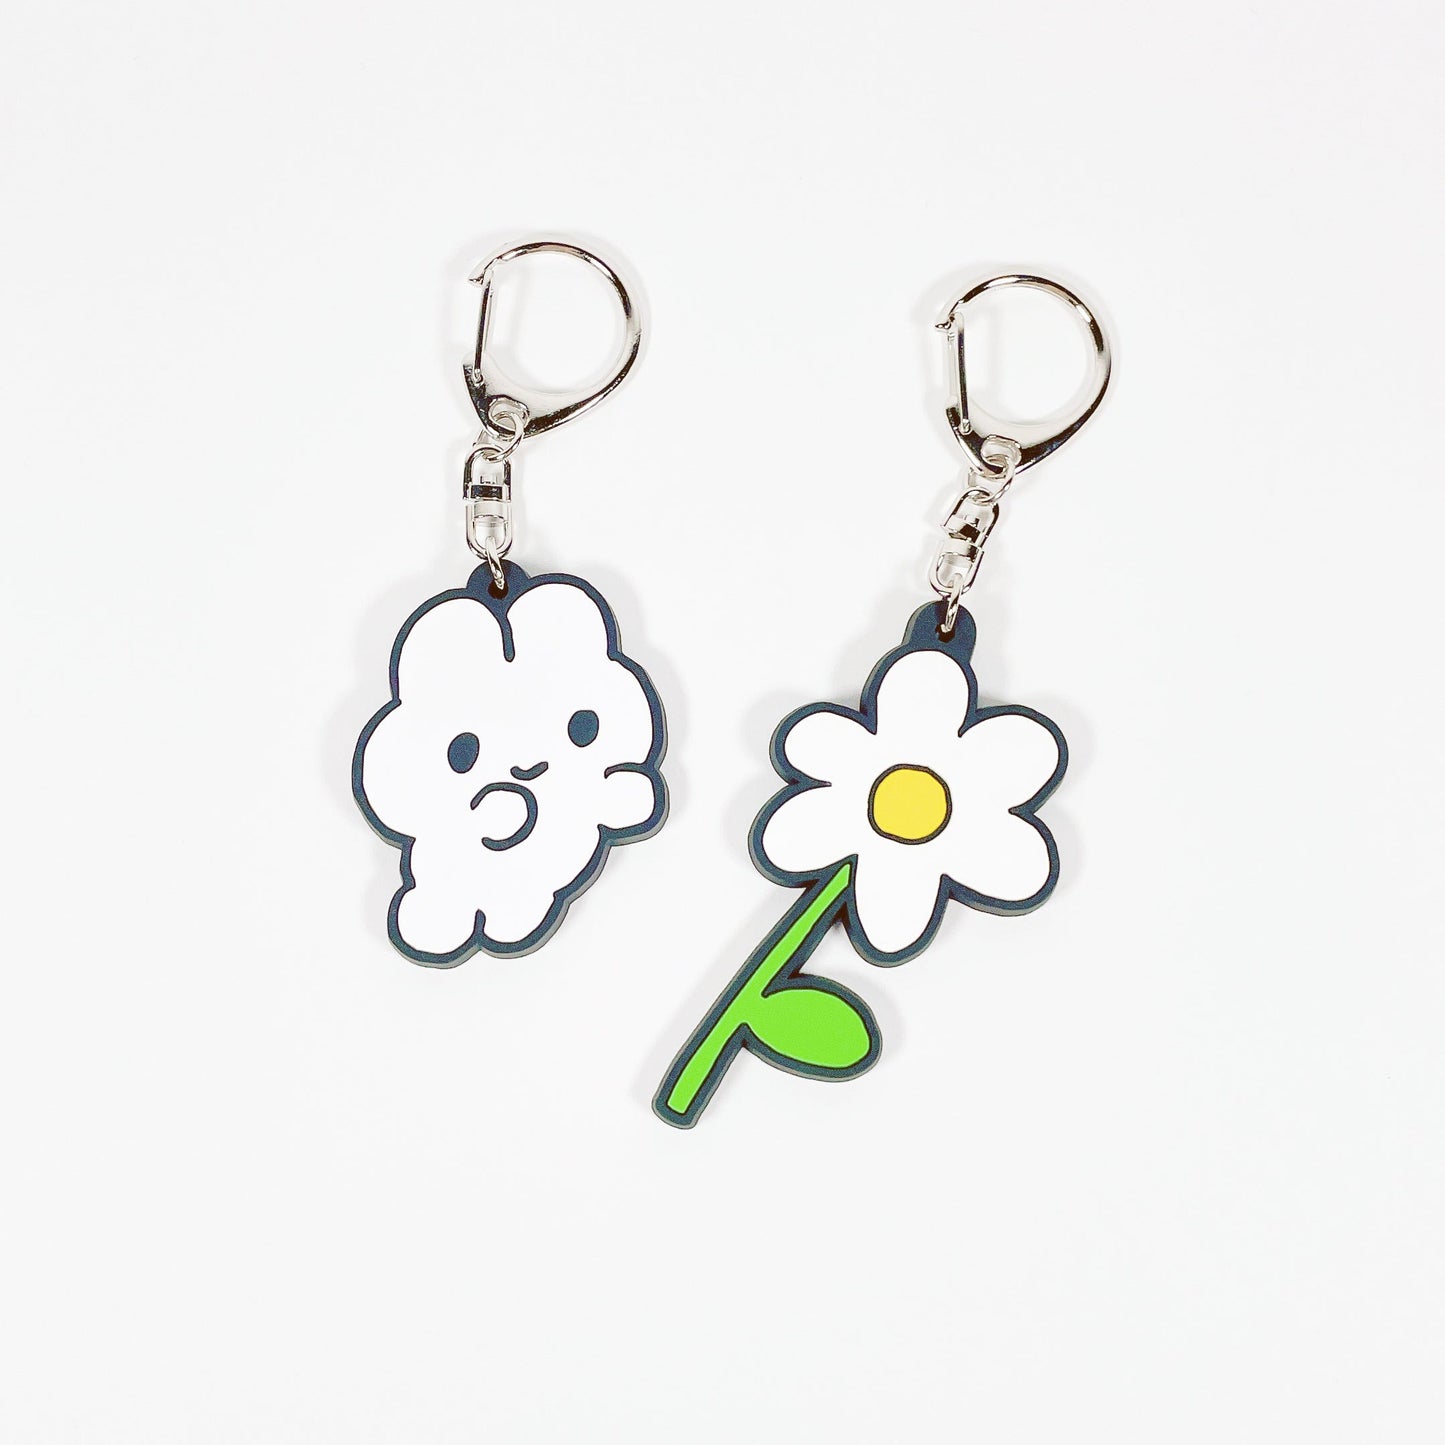 Yasusa -Chan이 가장 좋아하는 꽃 열쇠 사슬